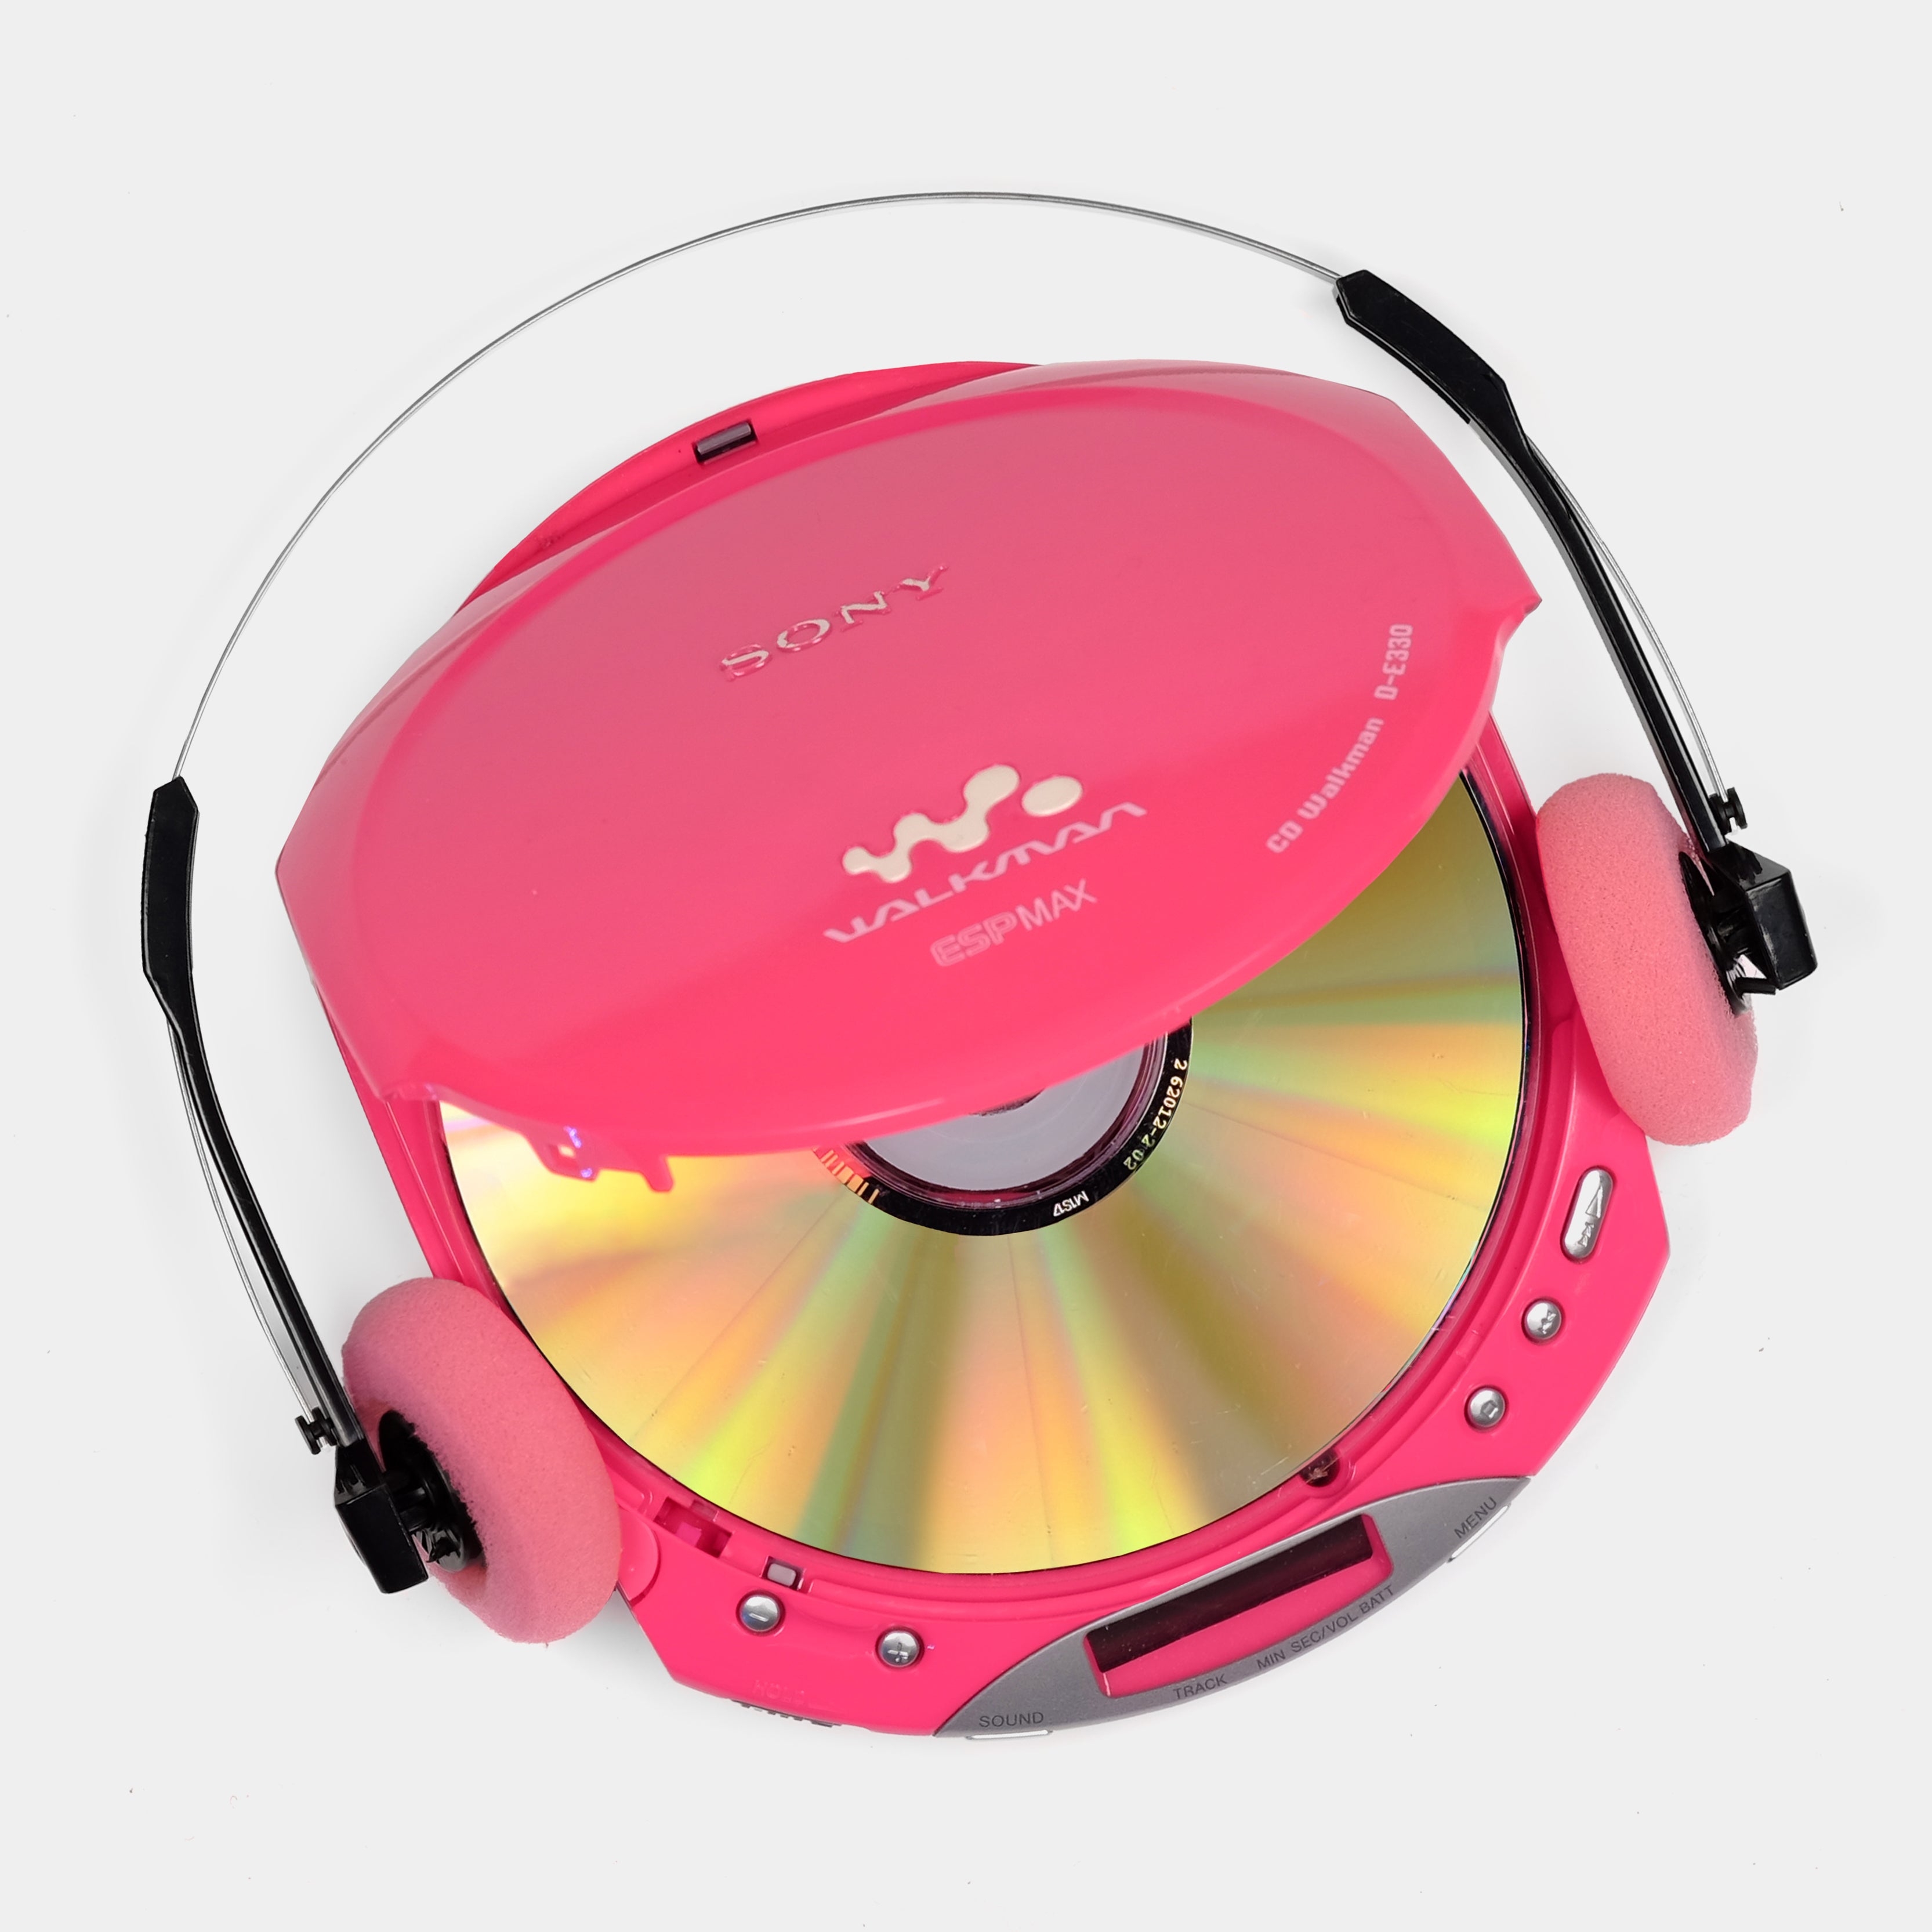 Sony Walkman D-E330 Pink Portable CD Player